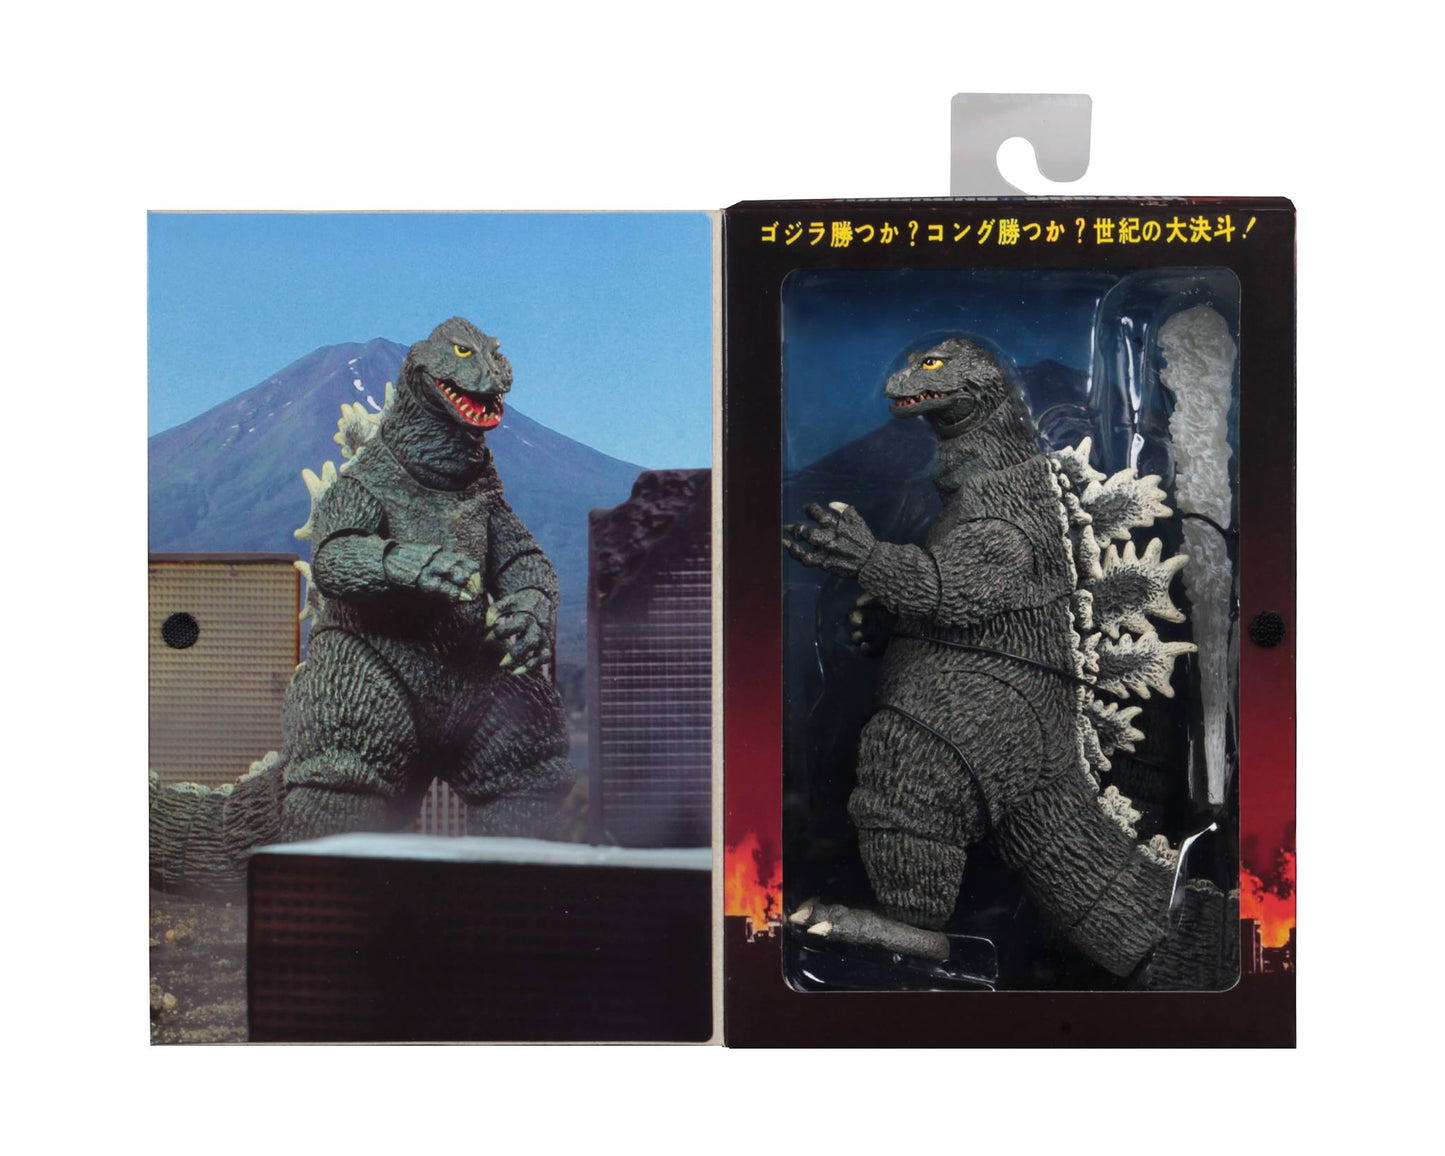 Godzilla - King Kong vs Godzilla Figura Neca